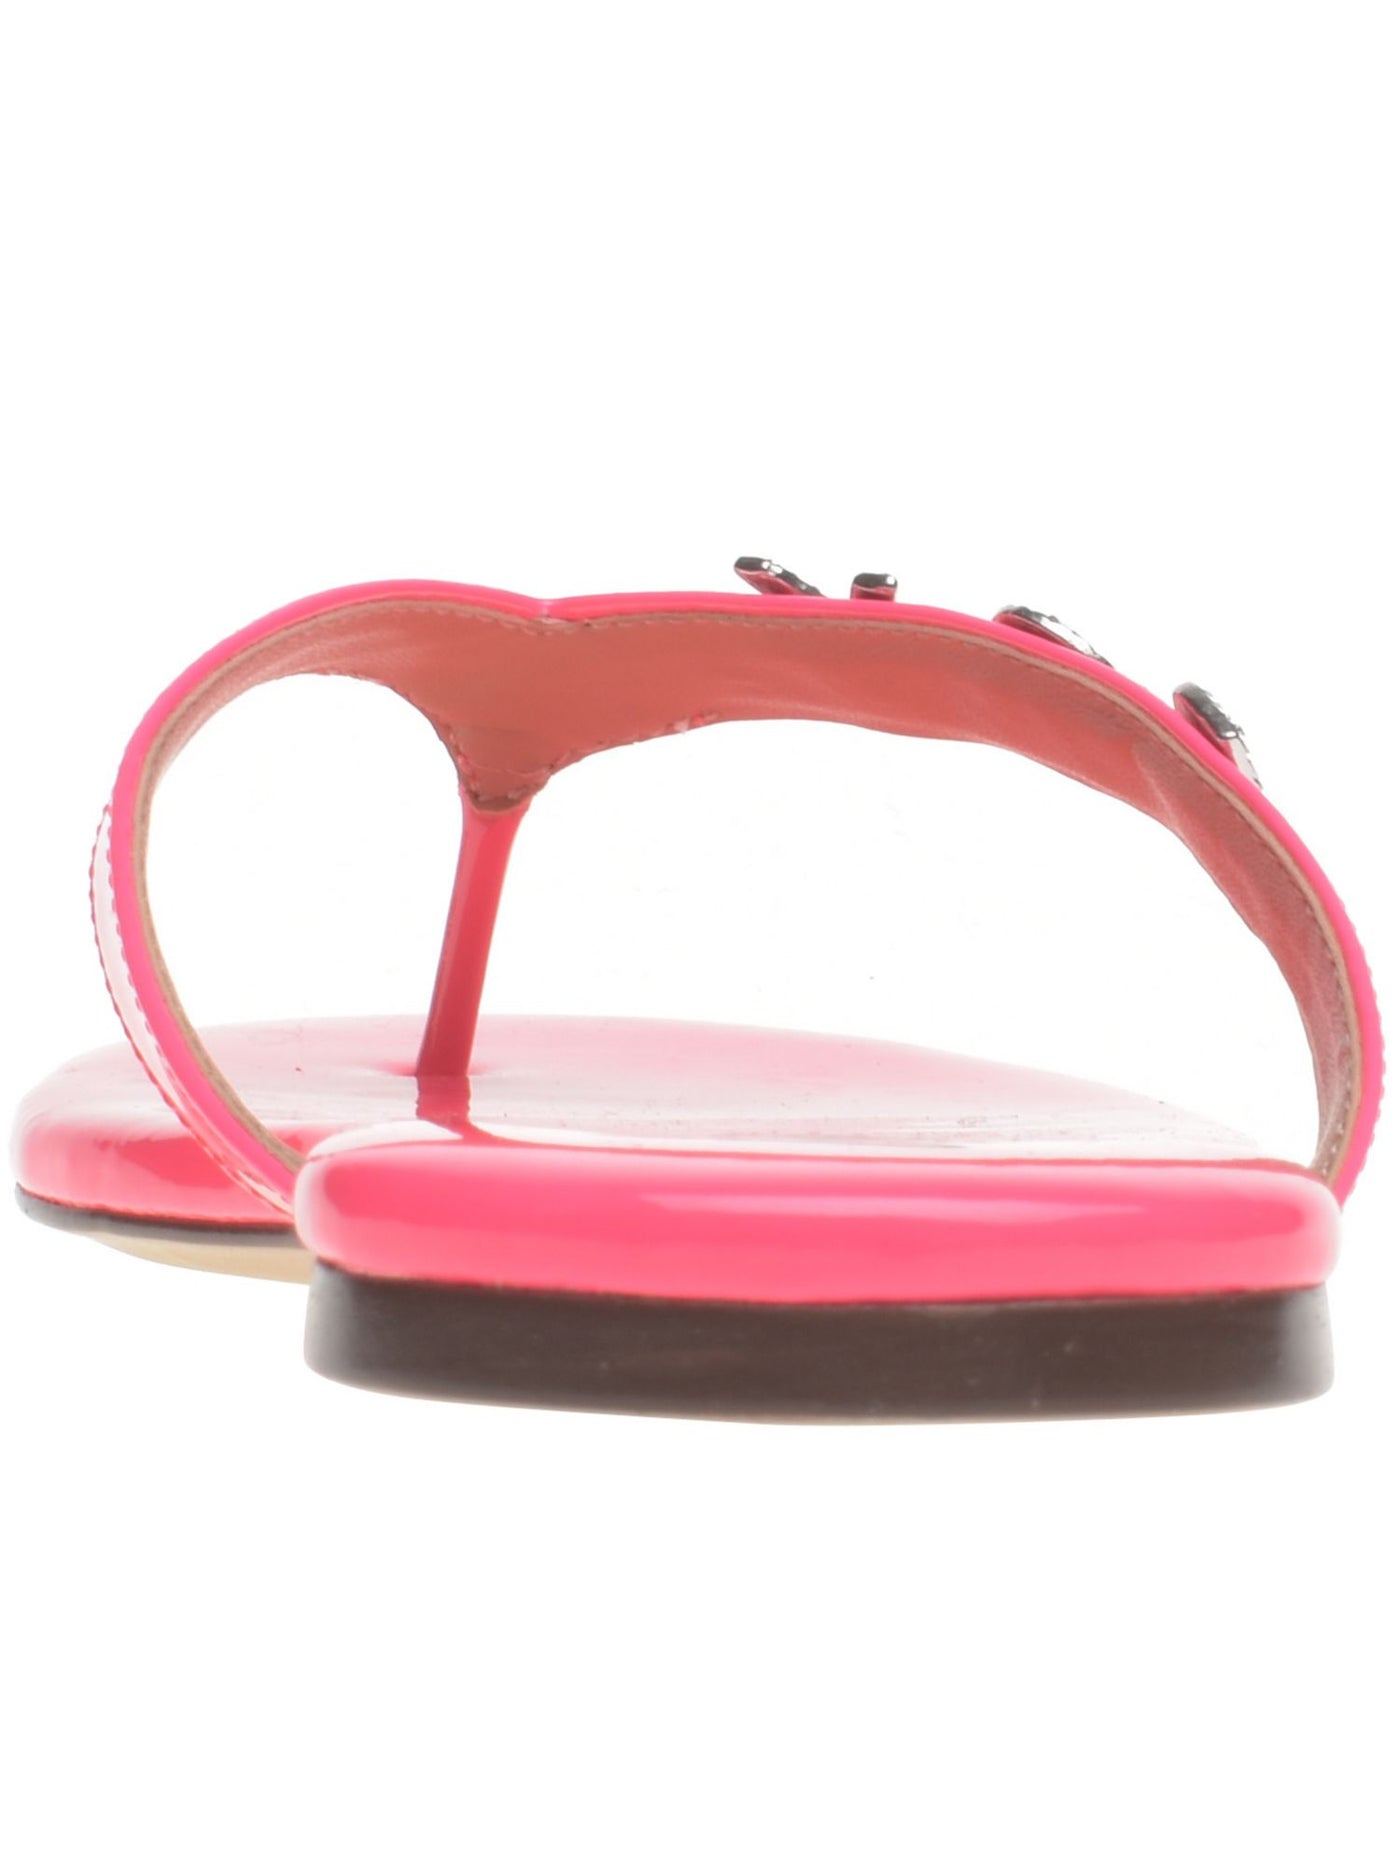 WILD PAIR Womens Pink Rhinestone Fantasia Round Toe Slip On Thong Sandals Shoes 7.5 M